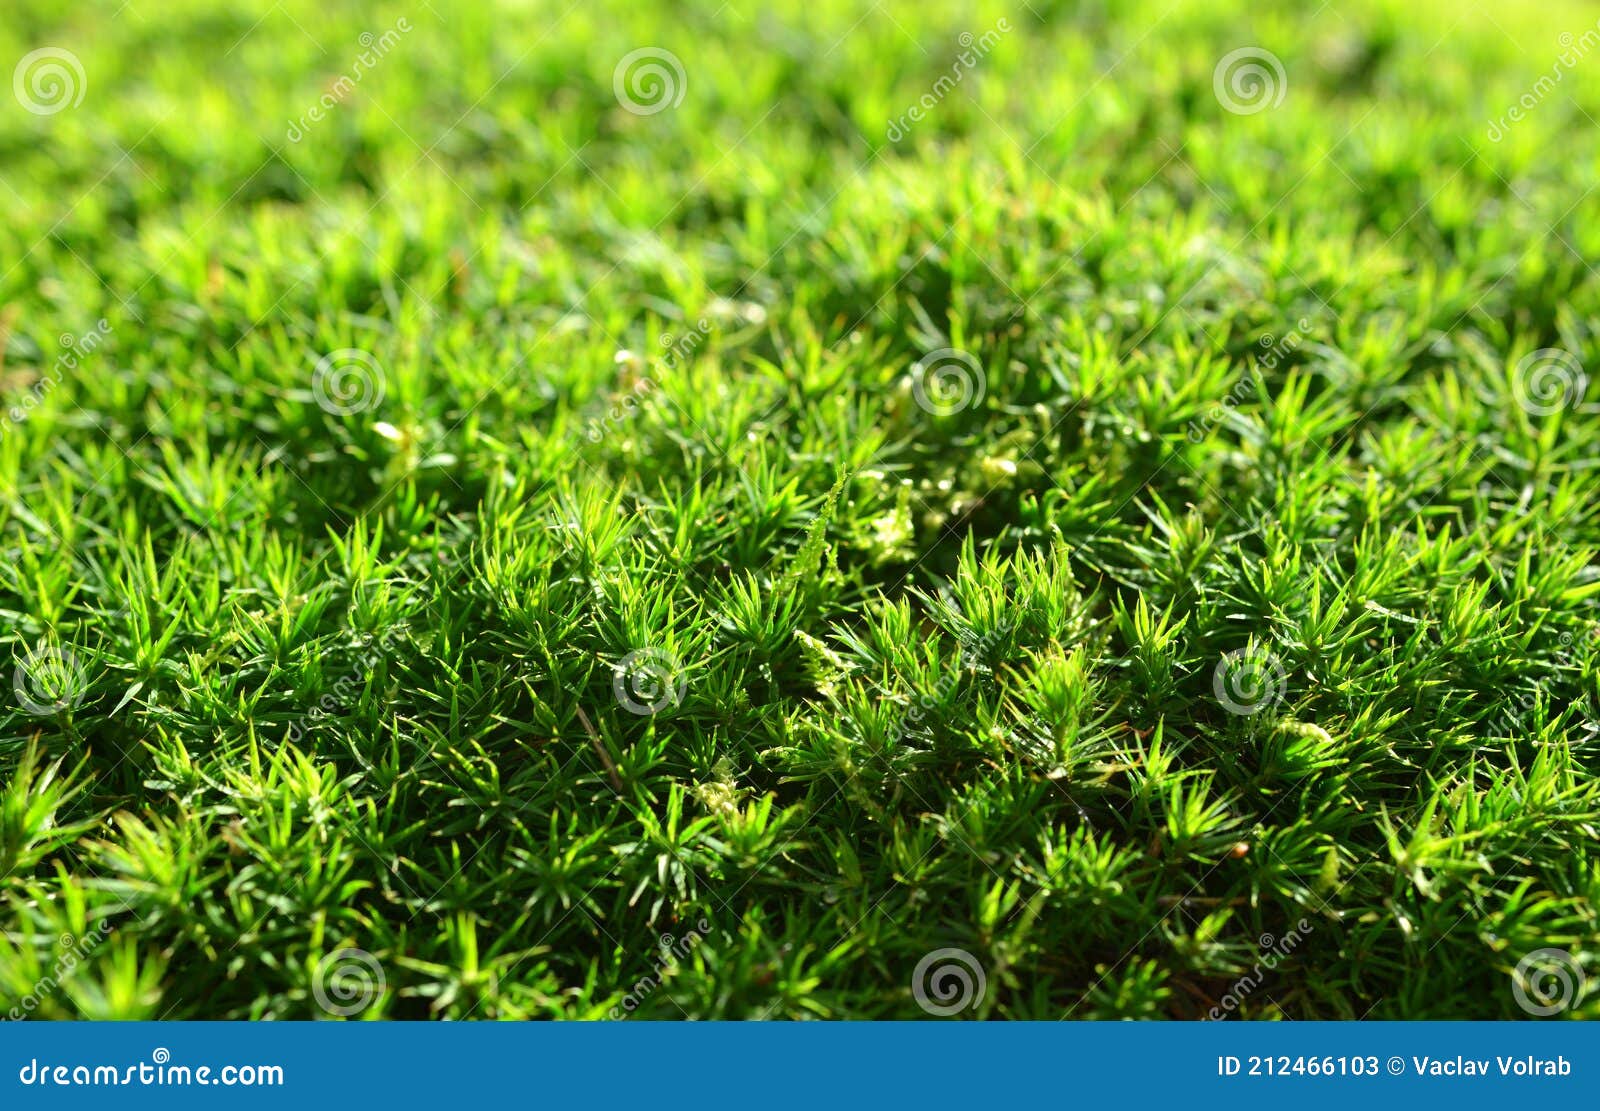 green moss  polytrichum commune  texture.